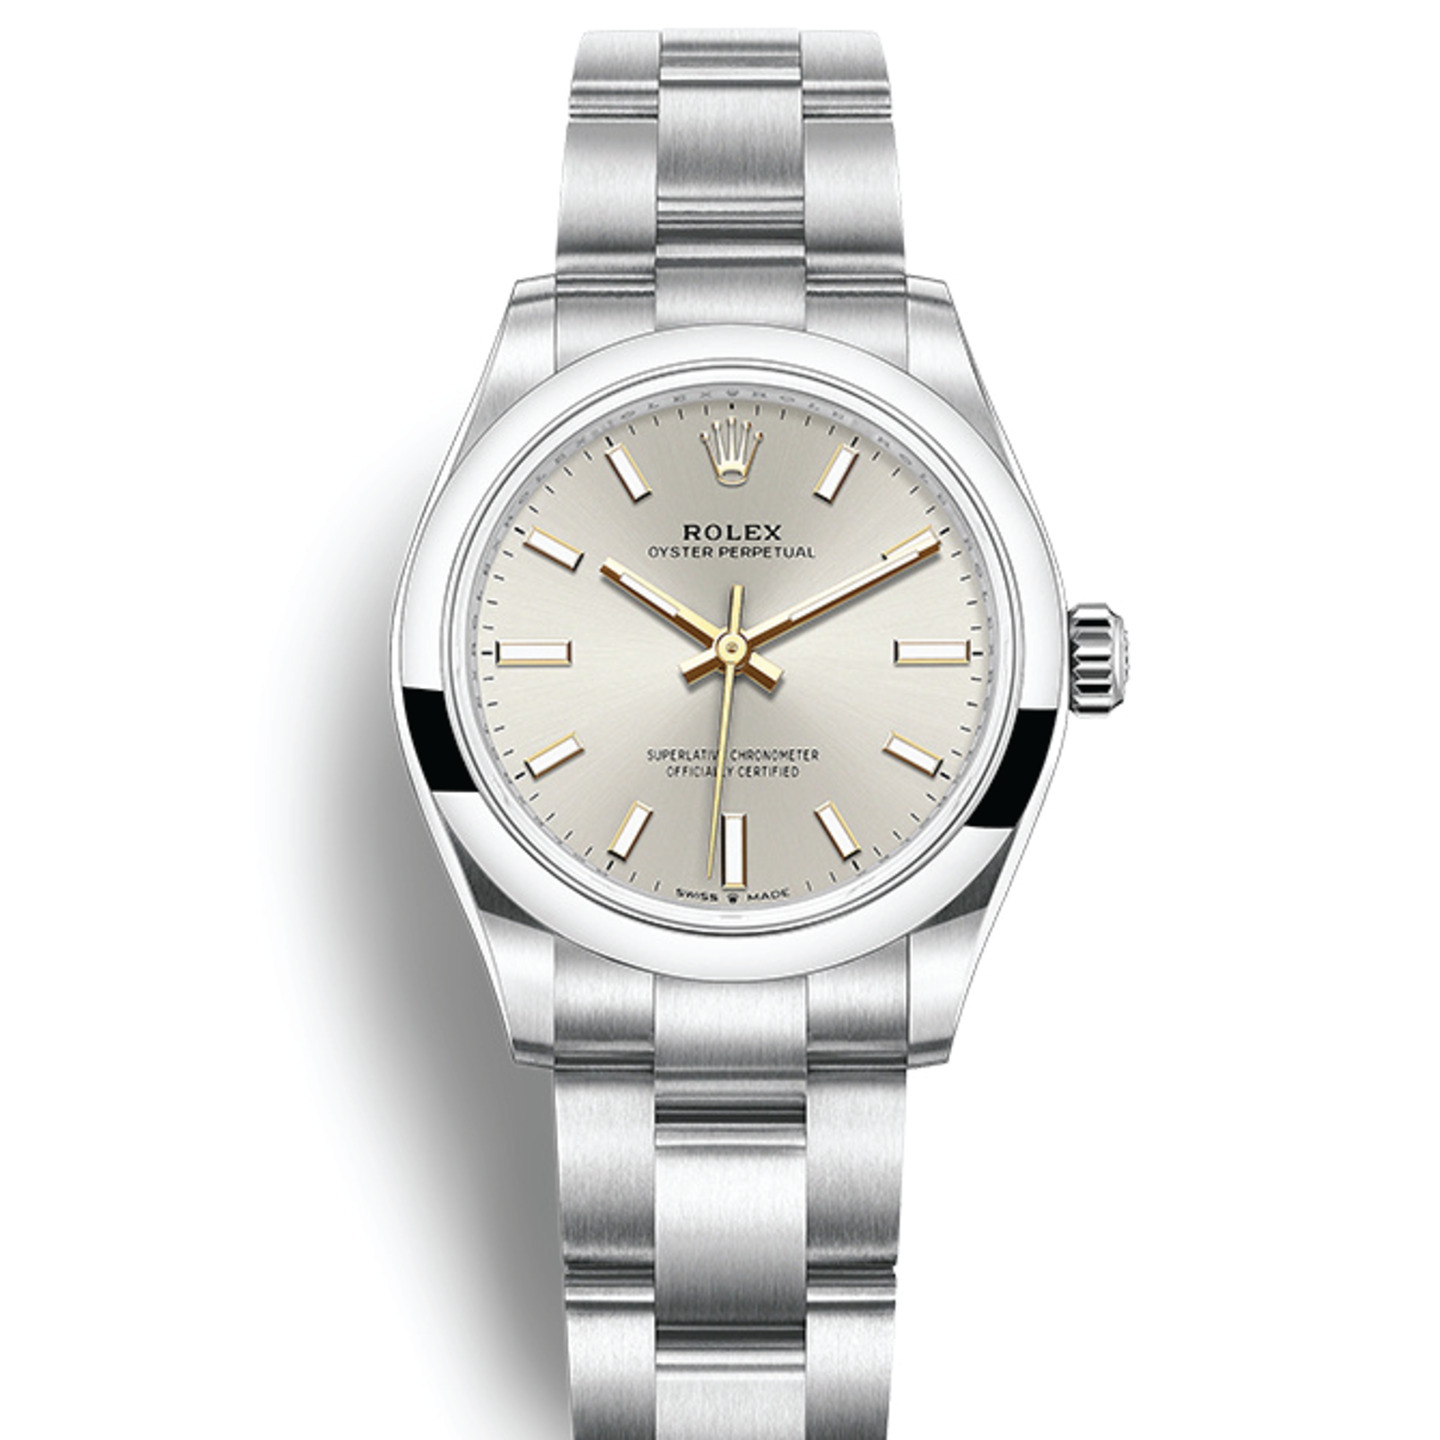 Rolex Oyster Perpetual 31mm 銀色錶面蠔式錶帶腕錶